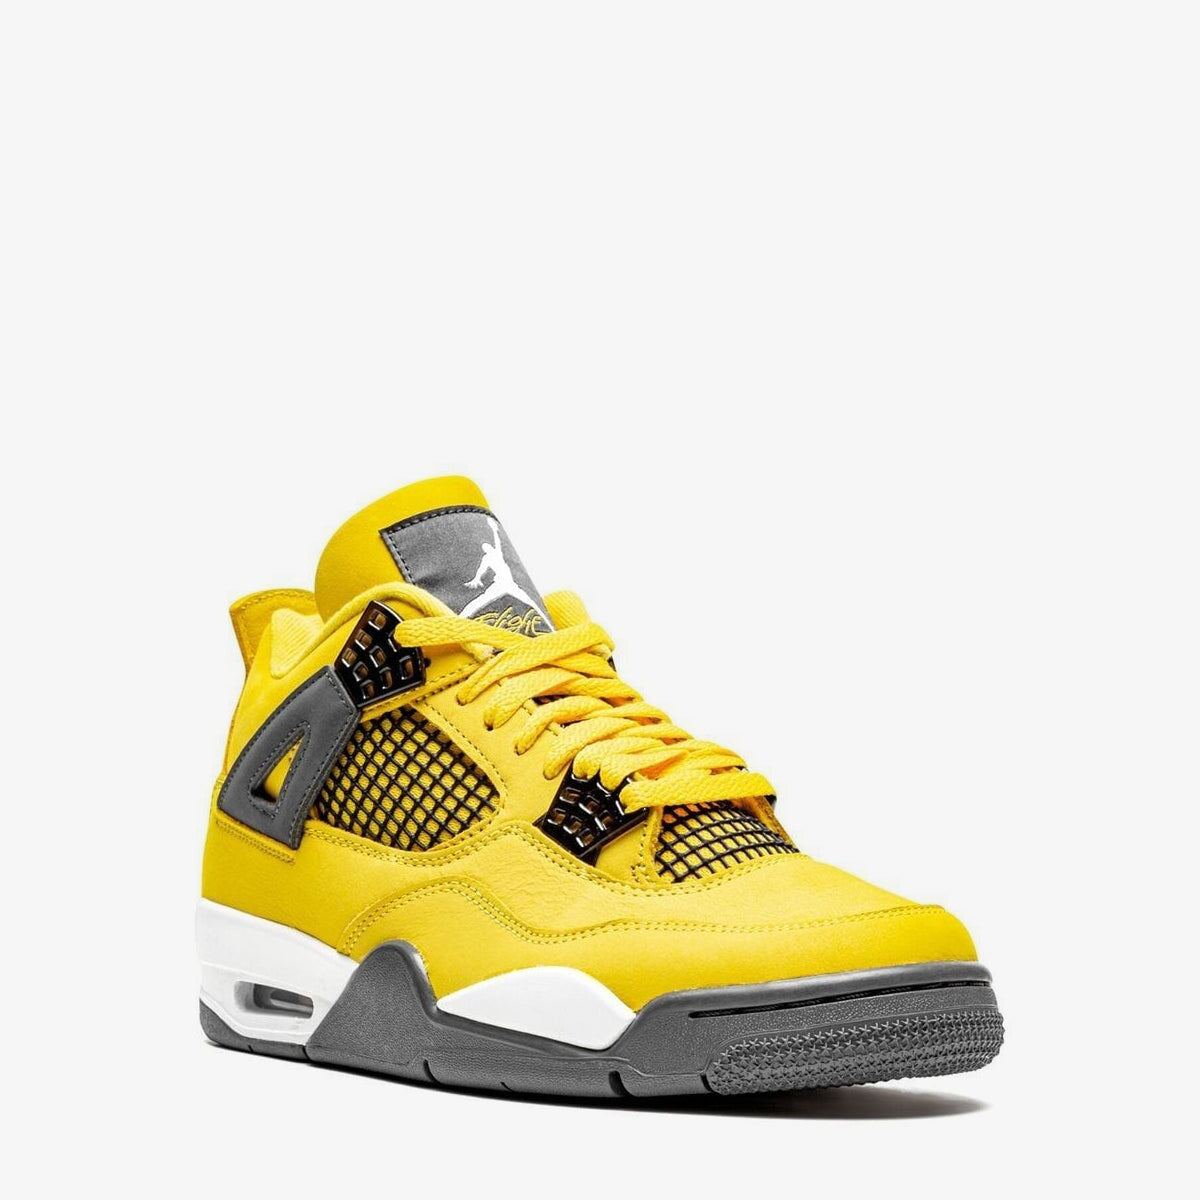 Air Jordan 4 “Lightning” Sneakers Air Jordan